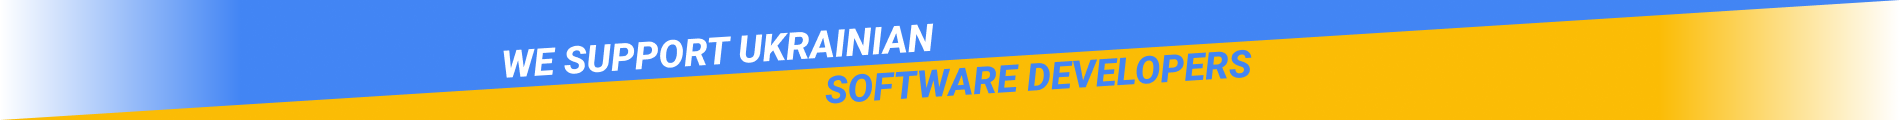 Support Ukrainian Software Developers